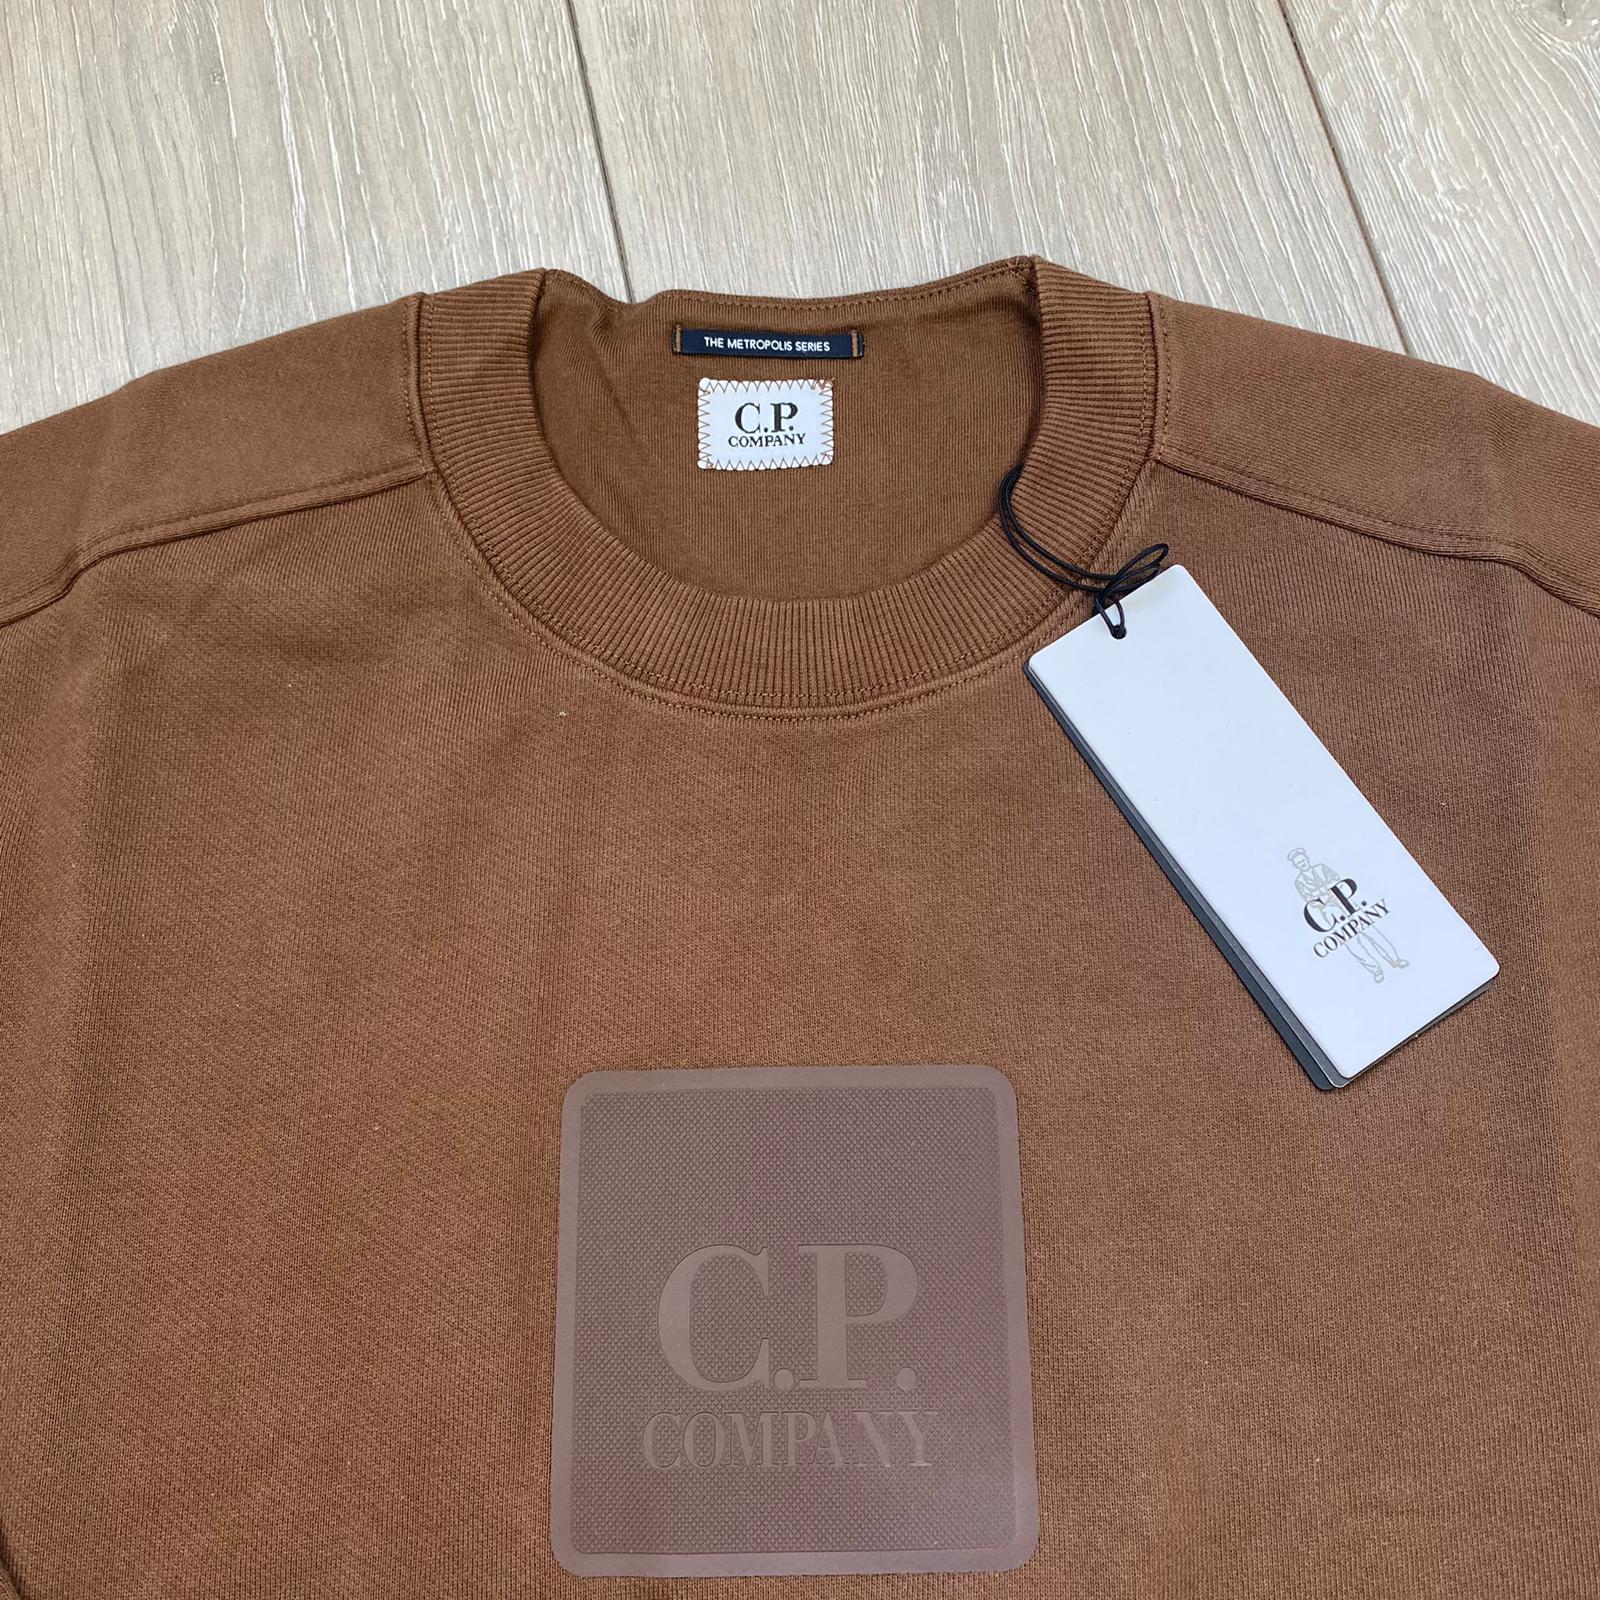 CP Company Metropolis Sweatshirt